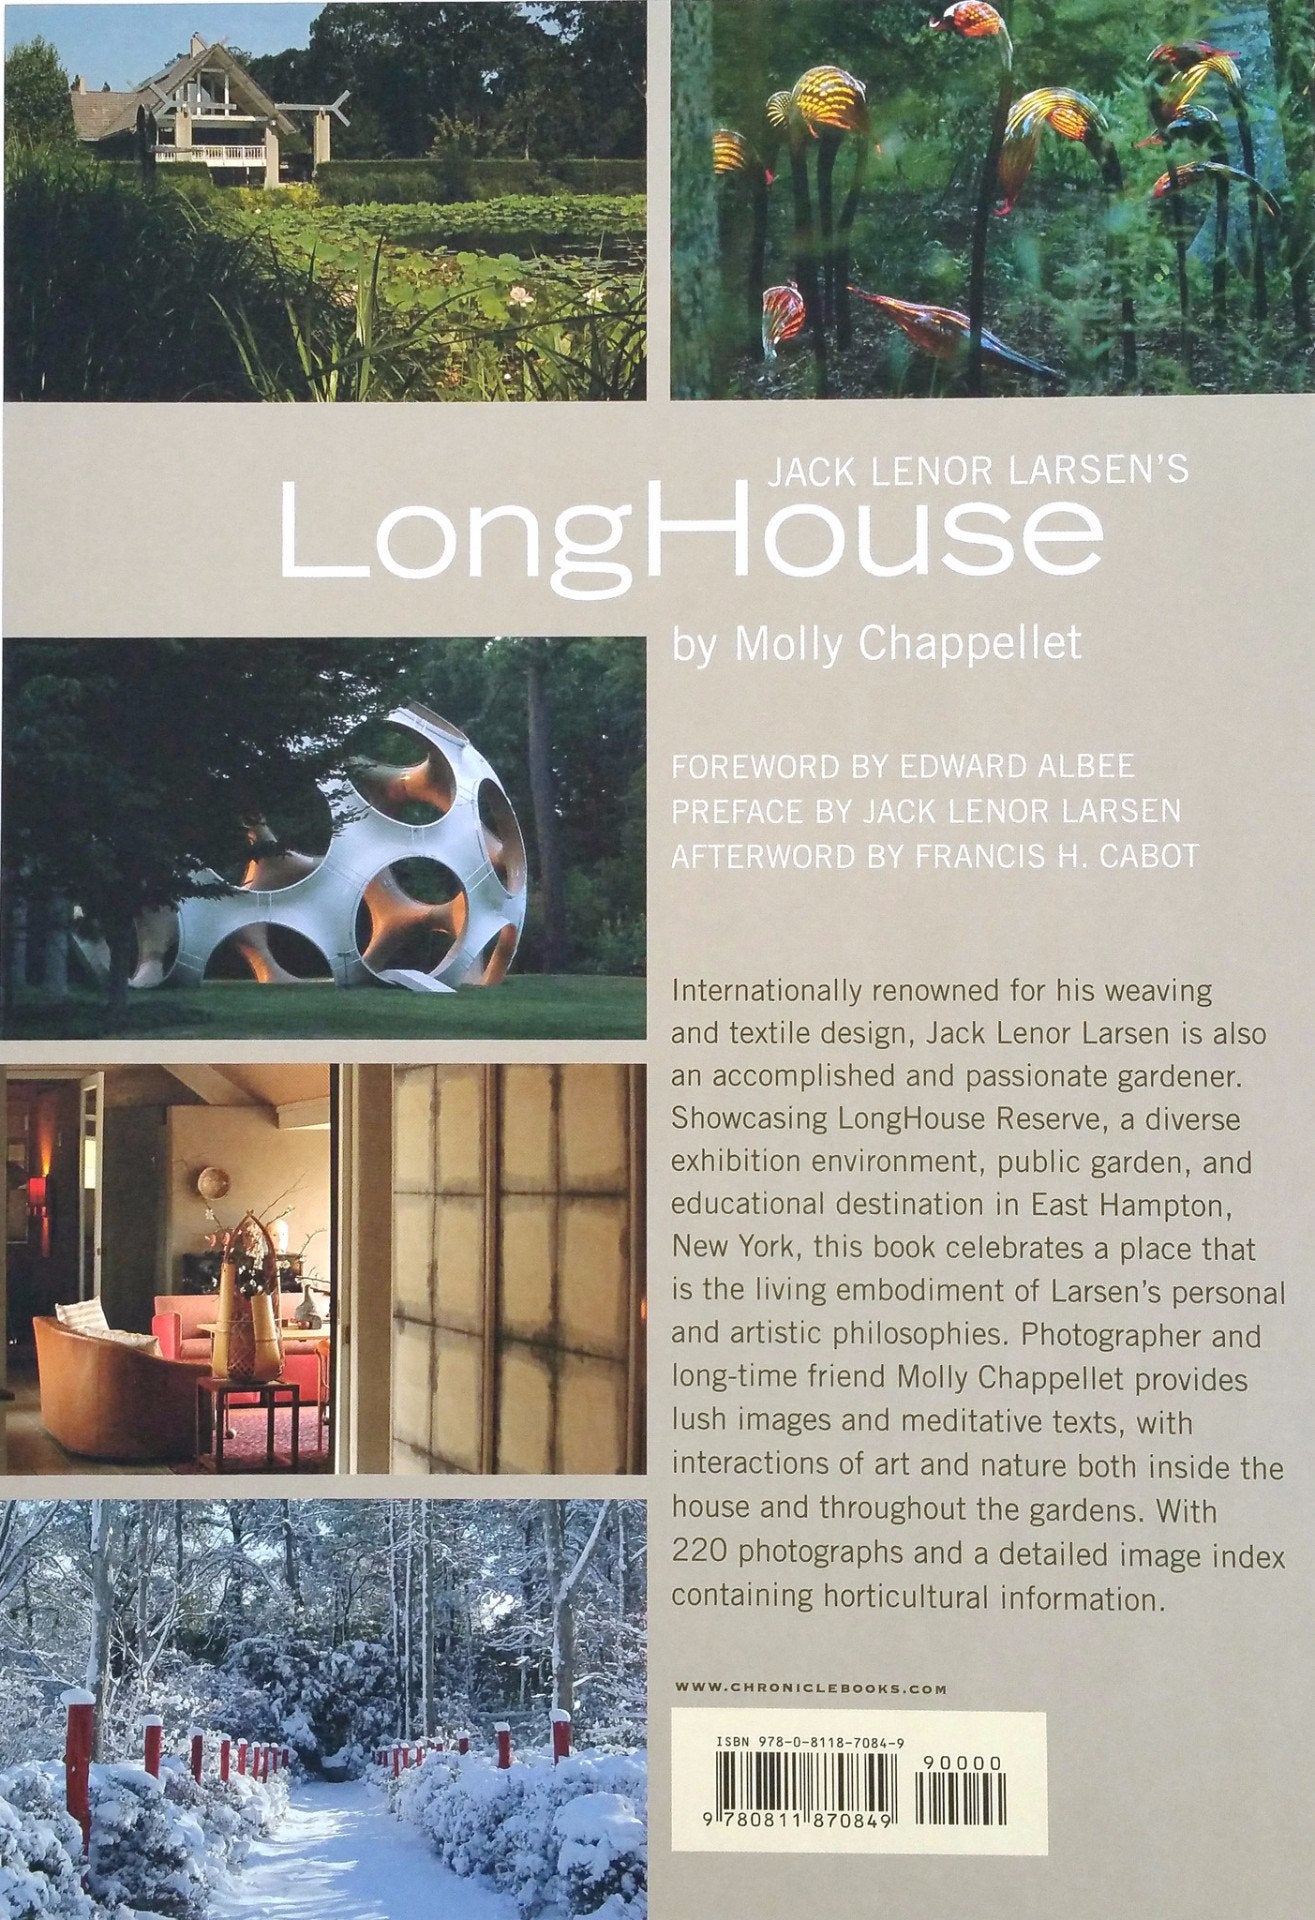 Jack Lenor Larsen's LongHouse by Molly Chappellet